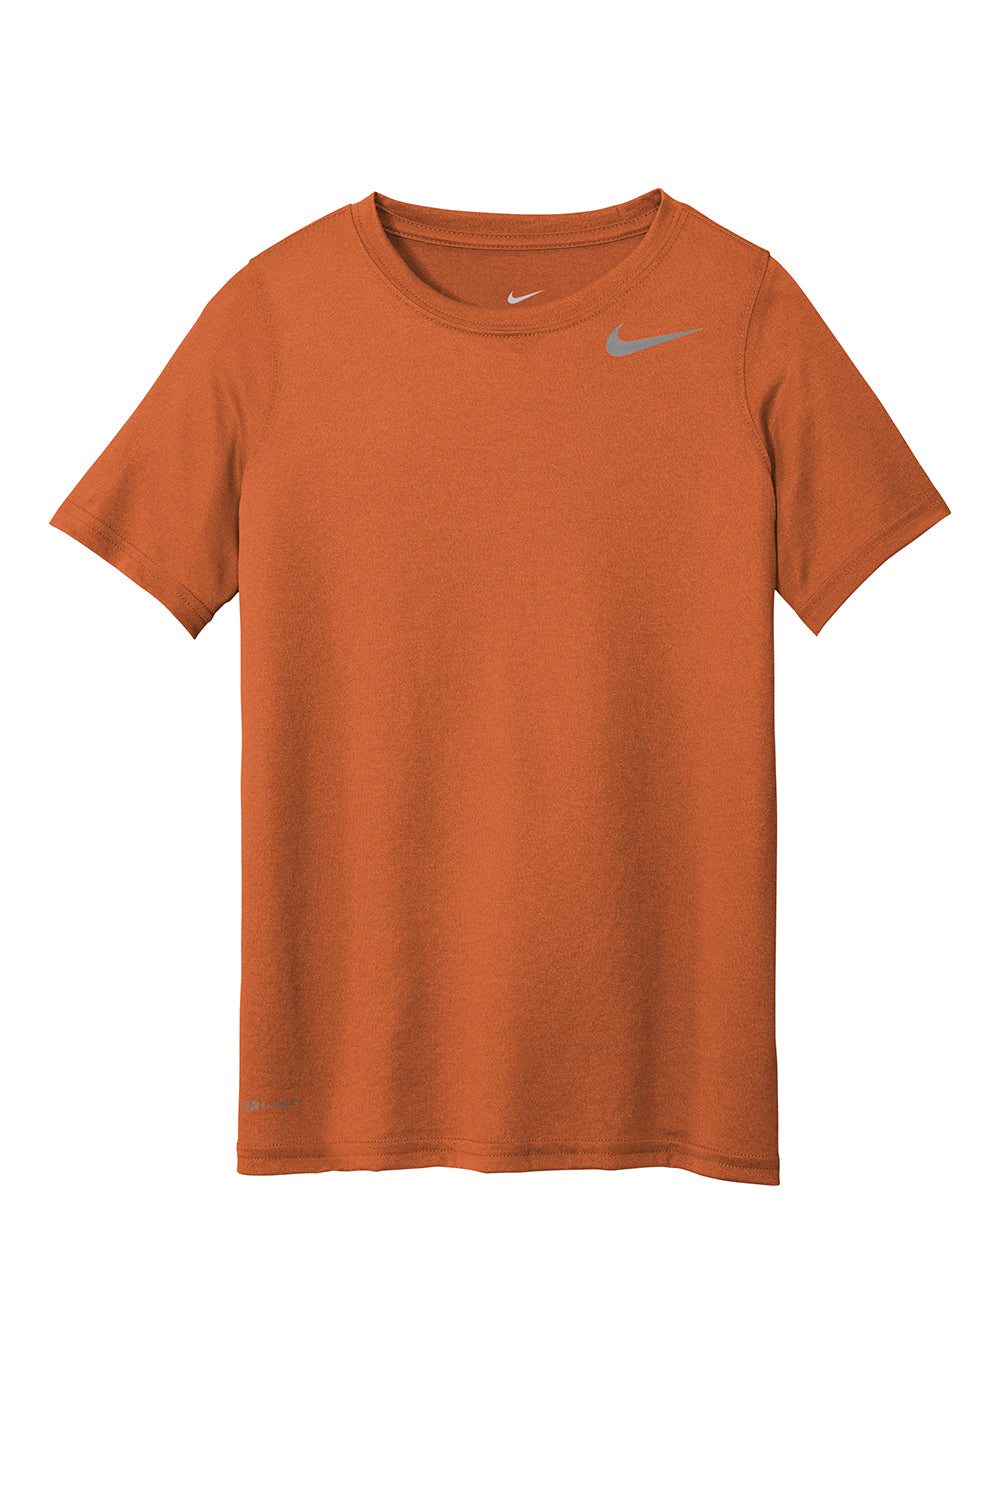 Nike DV7317 Youth Team rLegend Dri-Fit Moisure Wicking Short Sleeve Crewneck T-Shirt Desert Orange Flat Front